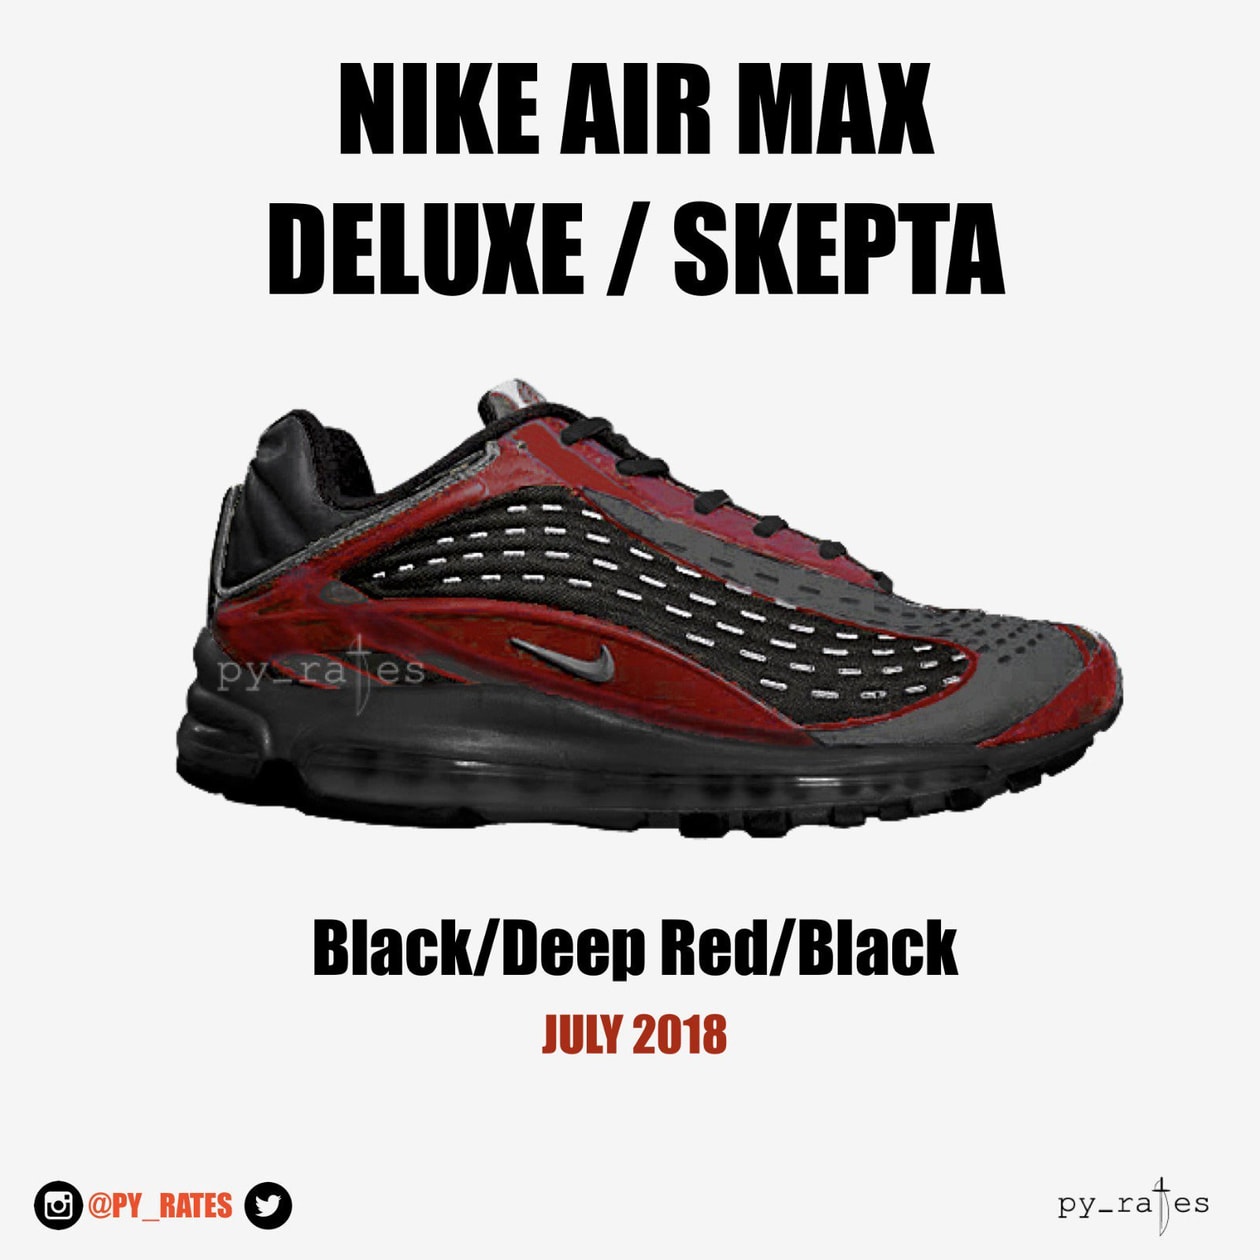 疑似 Skepta x Nike 最新聯名 Air Max Deluxe 系列諜照曝光